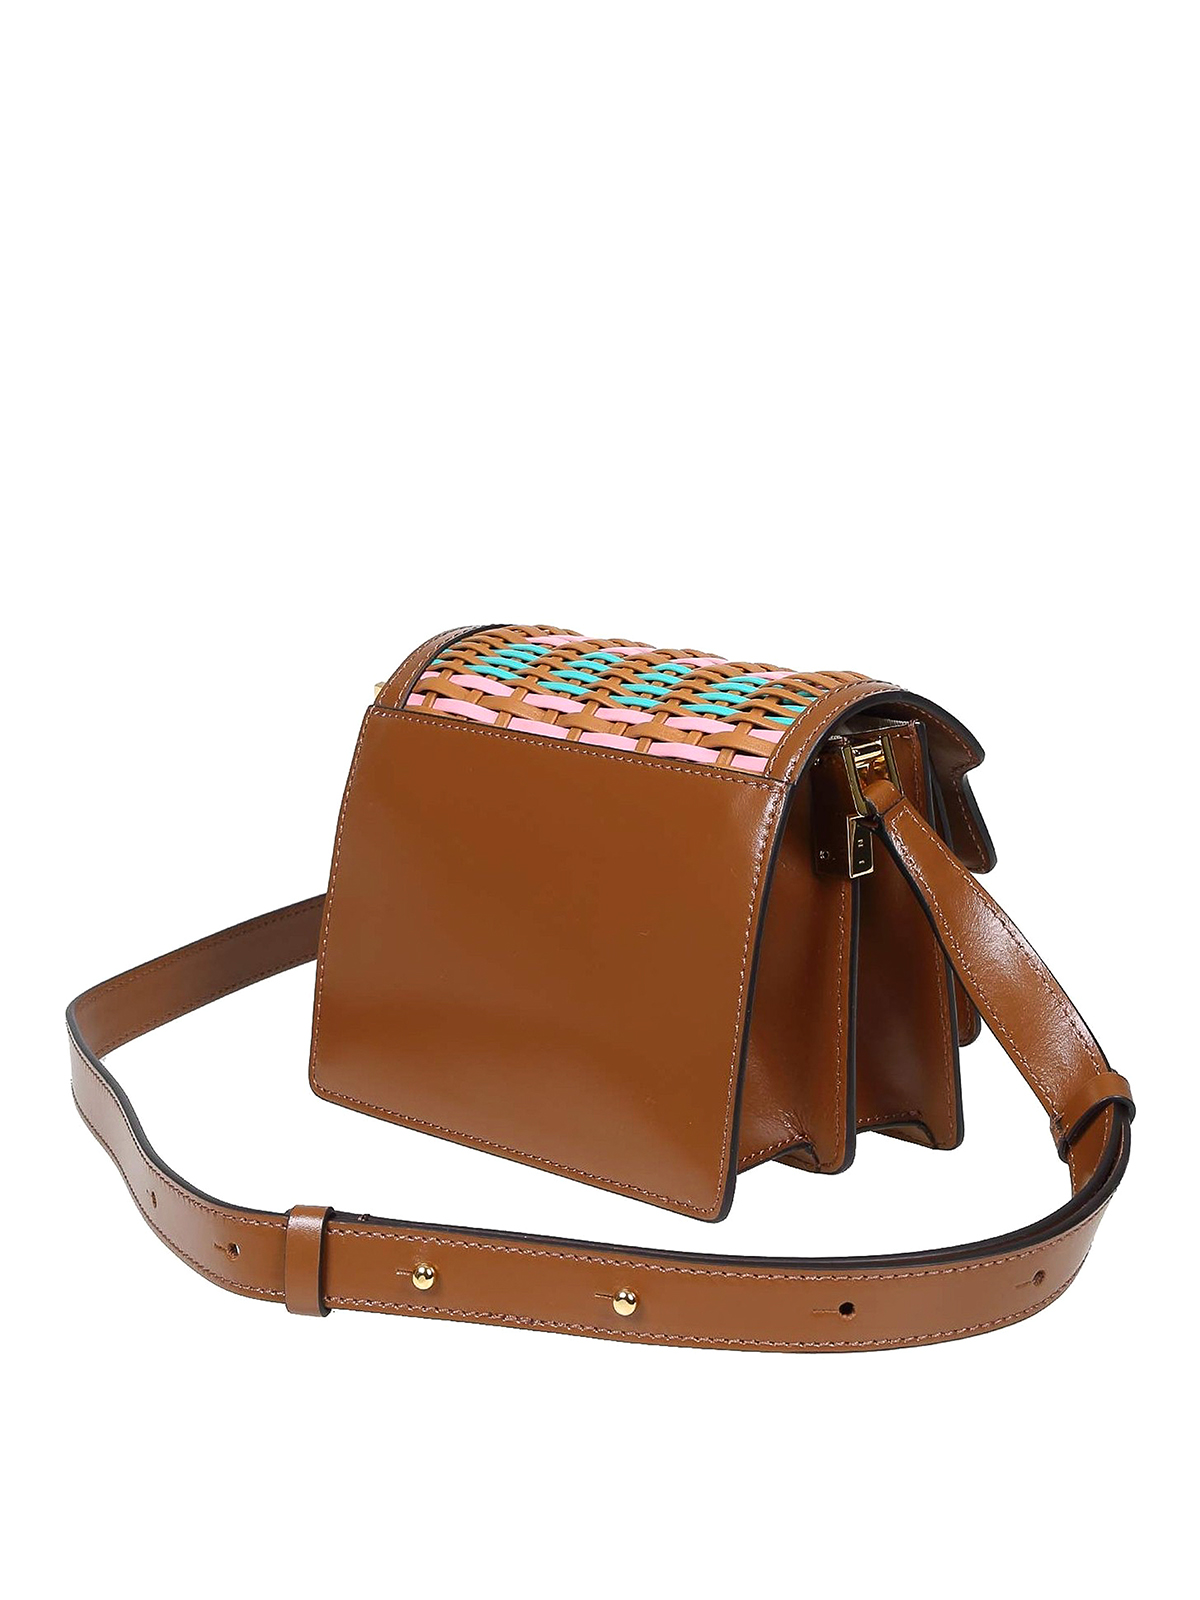 Marni Trunk Soft Mini Bag in Leather